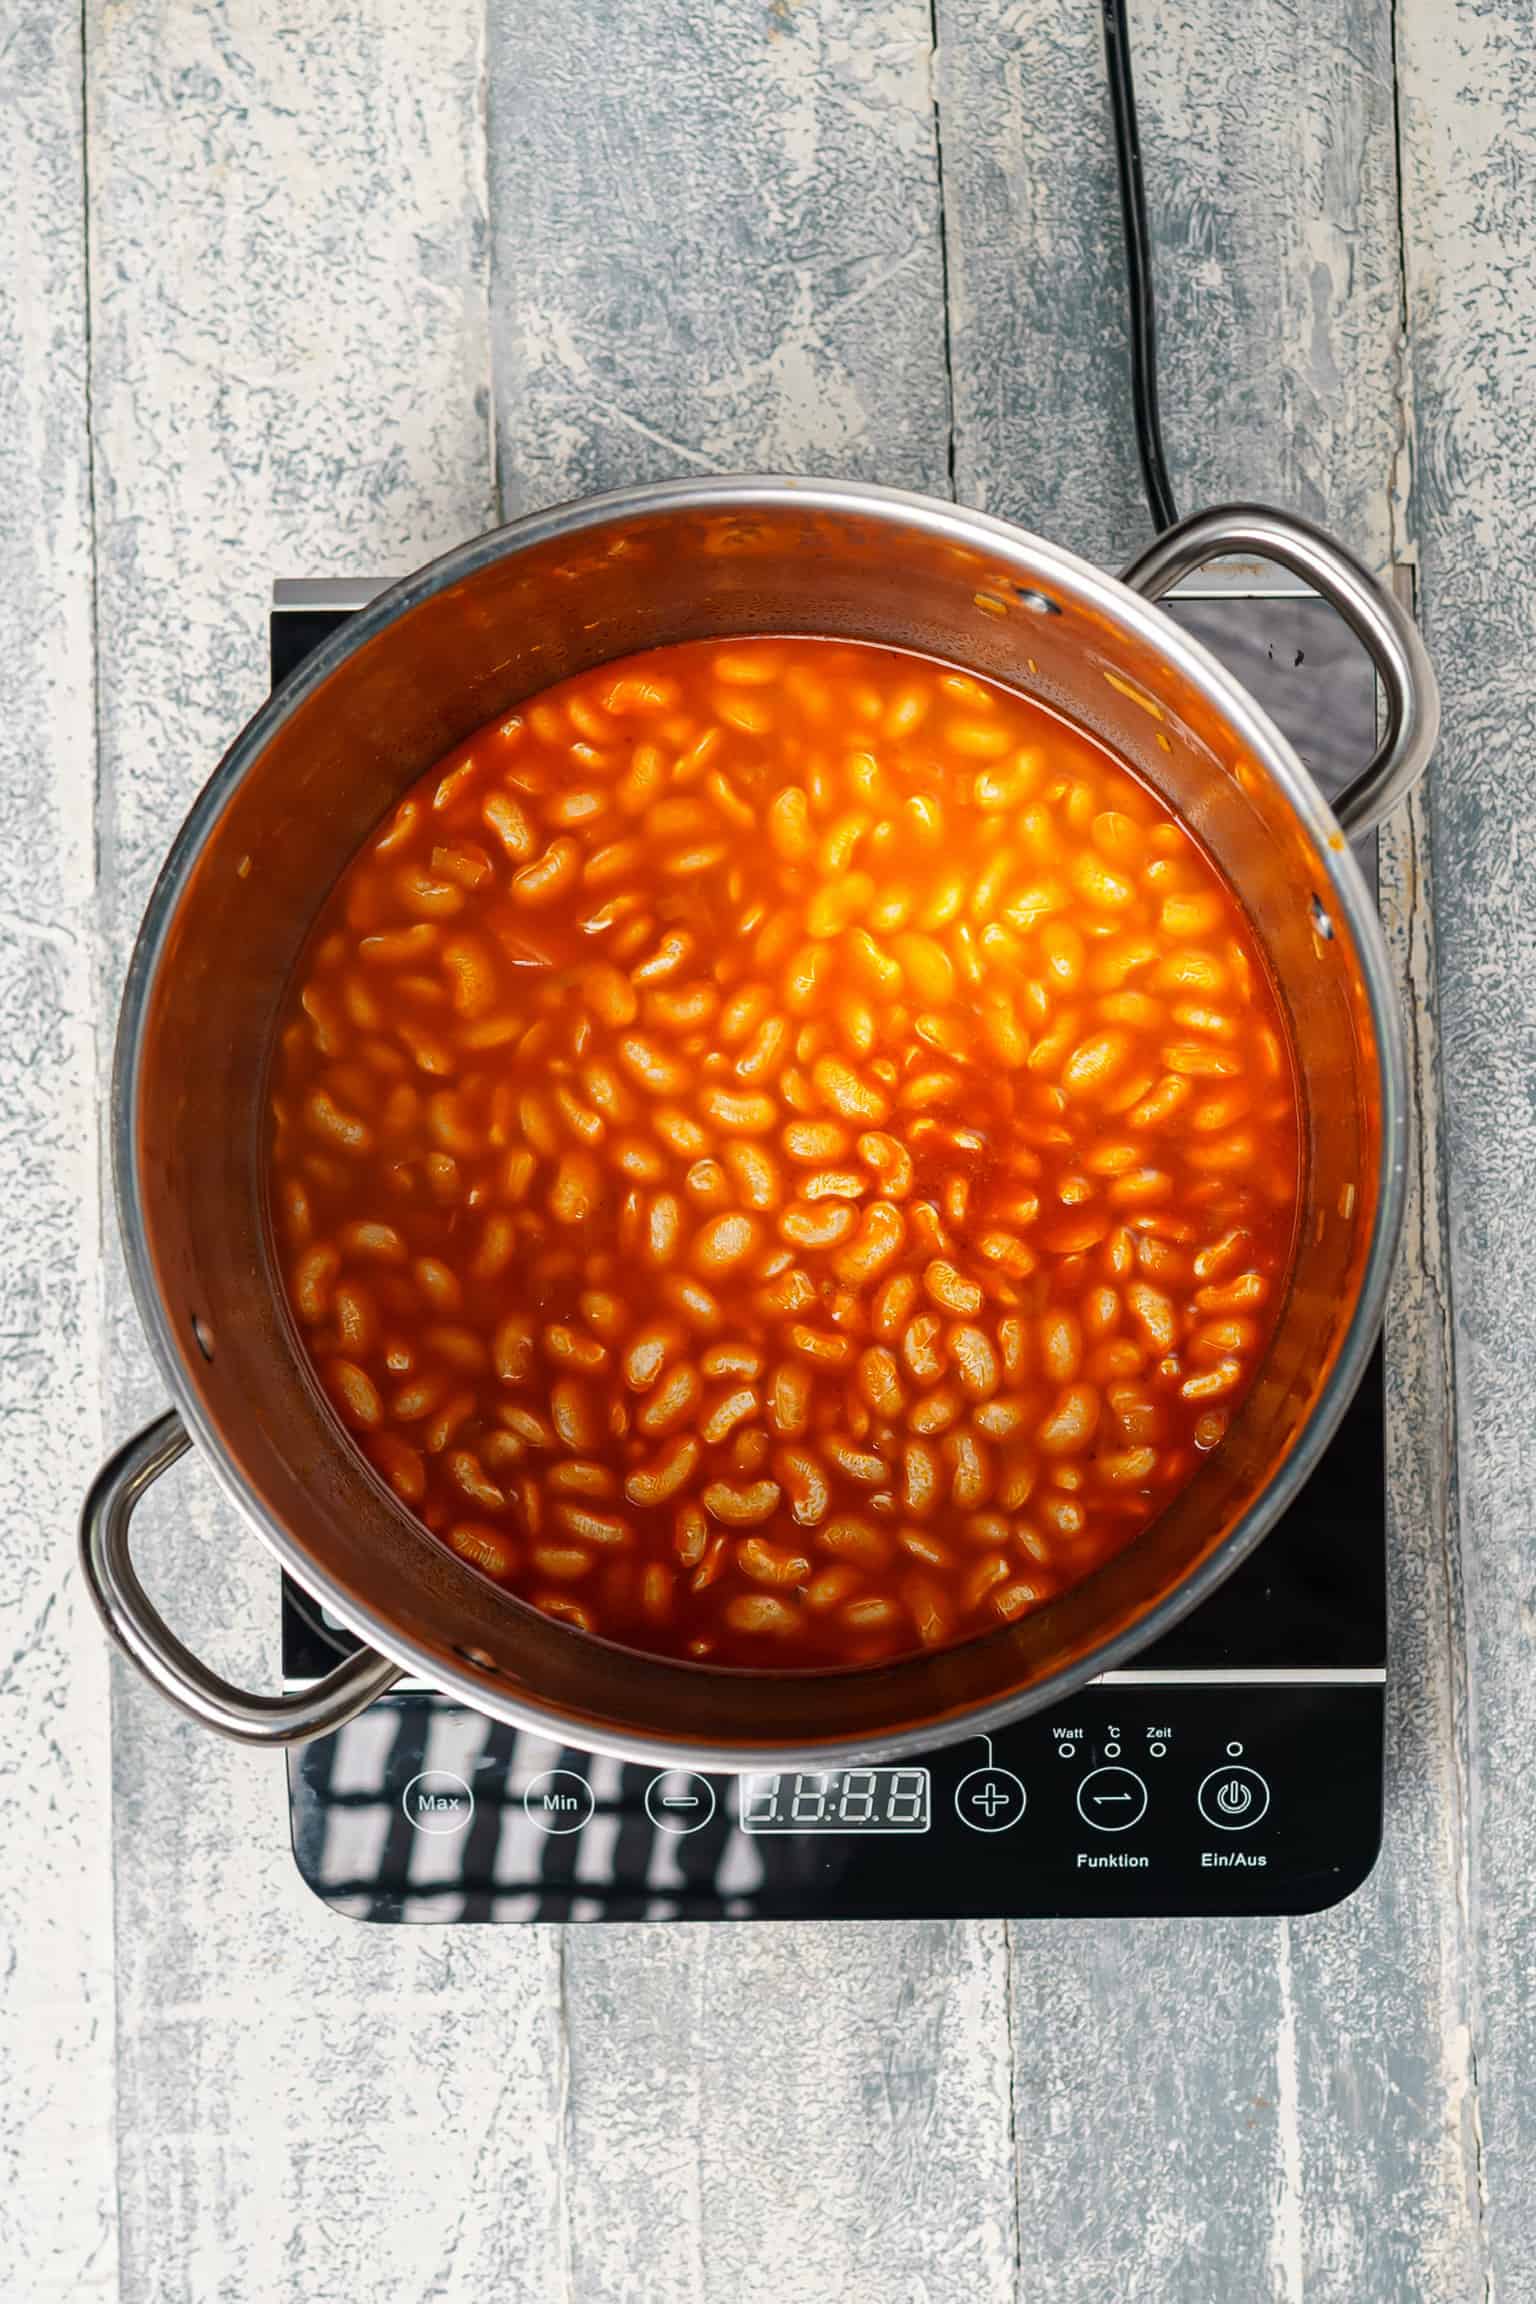 Cook the Greek bean soup (Fasolada)